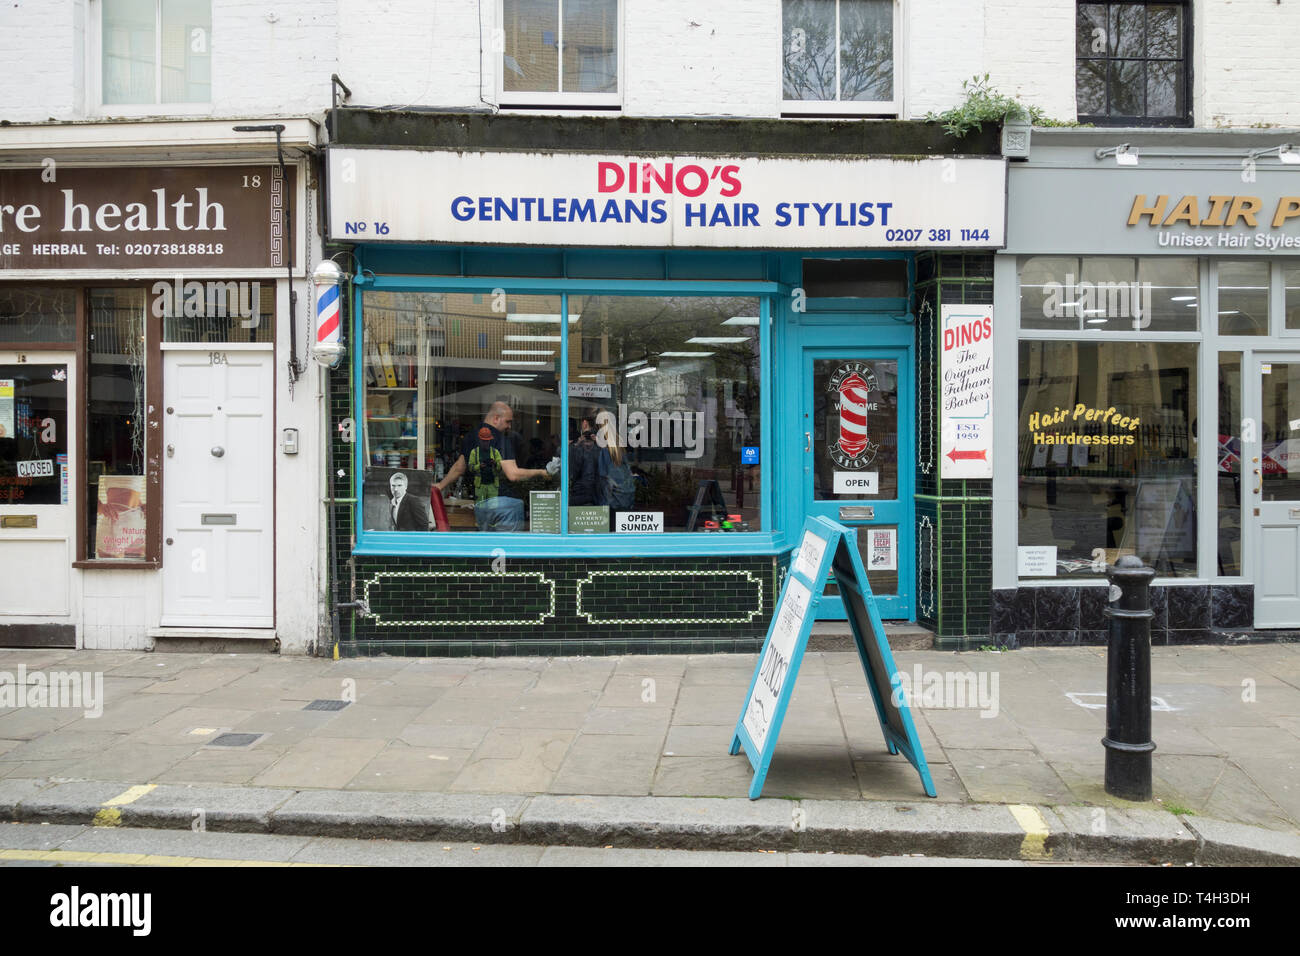 Dino's Gentleman's Hair Stylist shop front in Fulham, London, UK Stock Photo